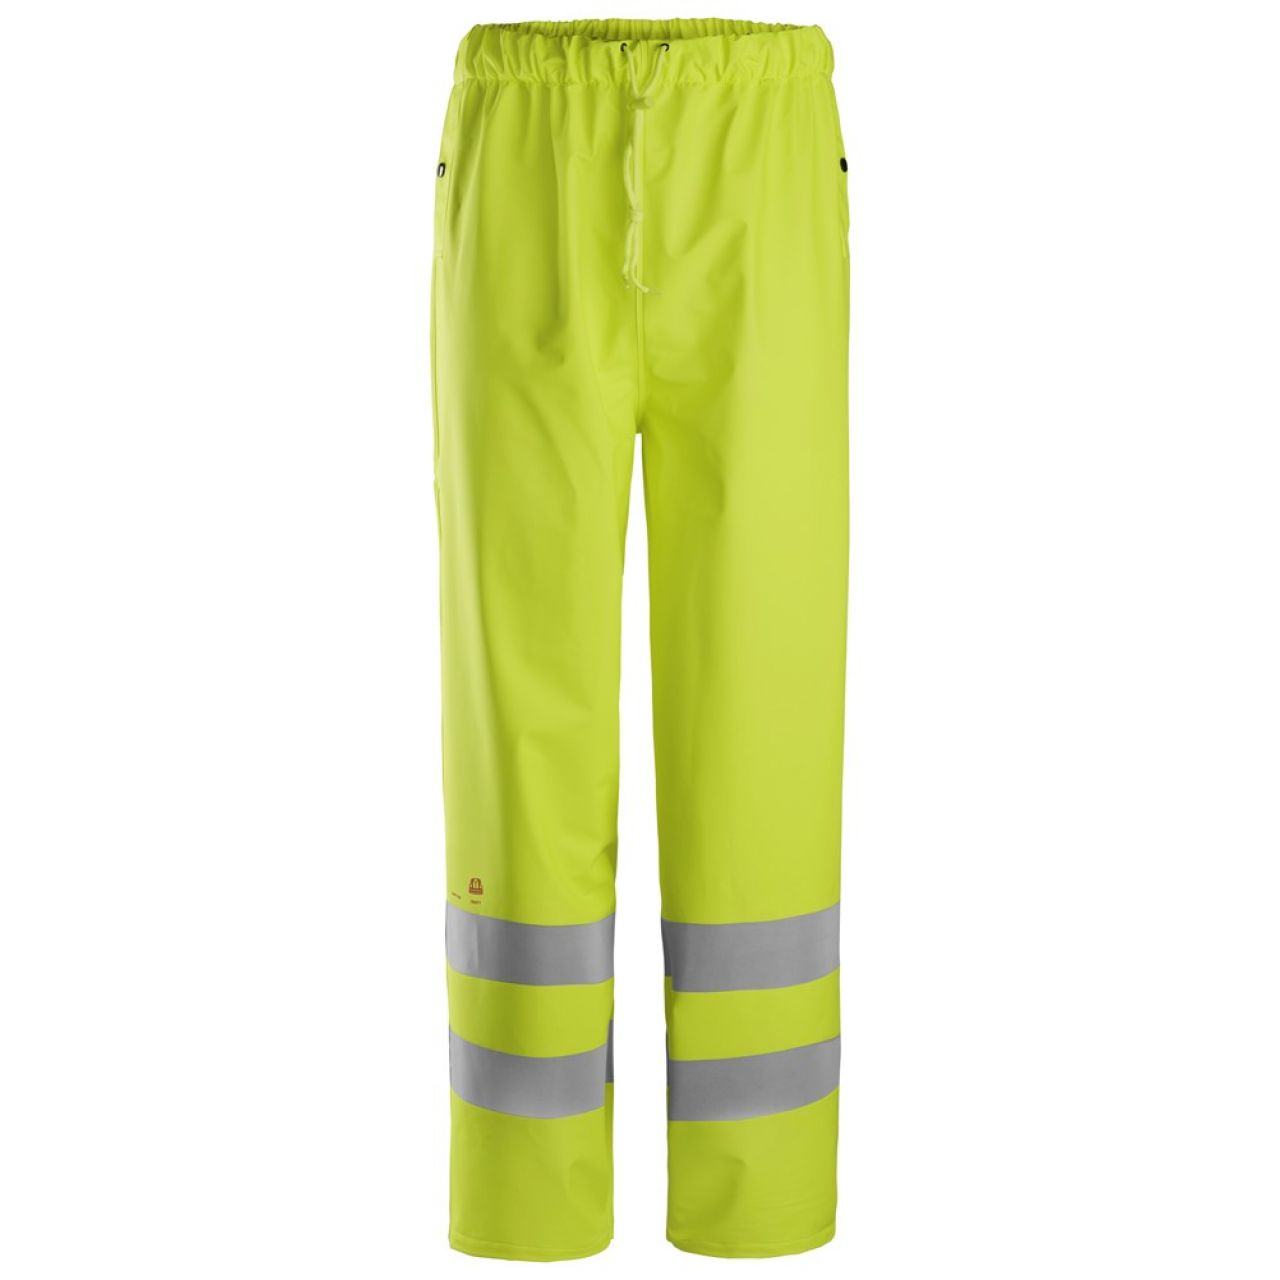 8267 Pantalones largos impermeables PU de alta visibilidad clase 2 ProtecWork amarillo talla M